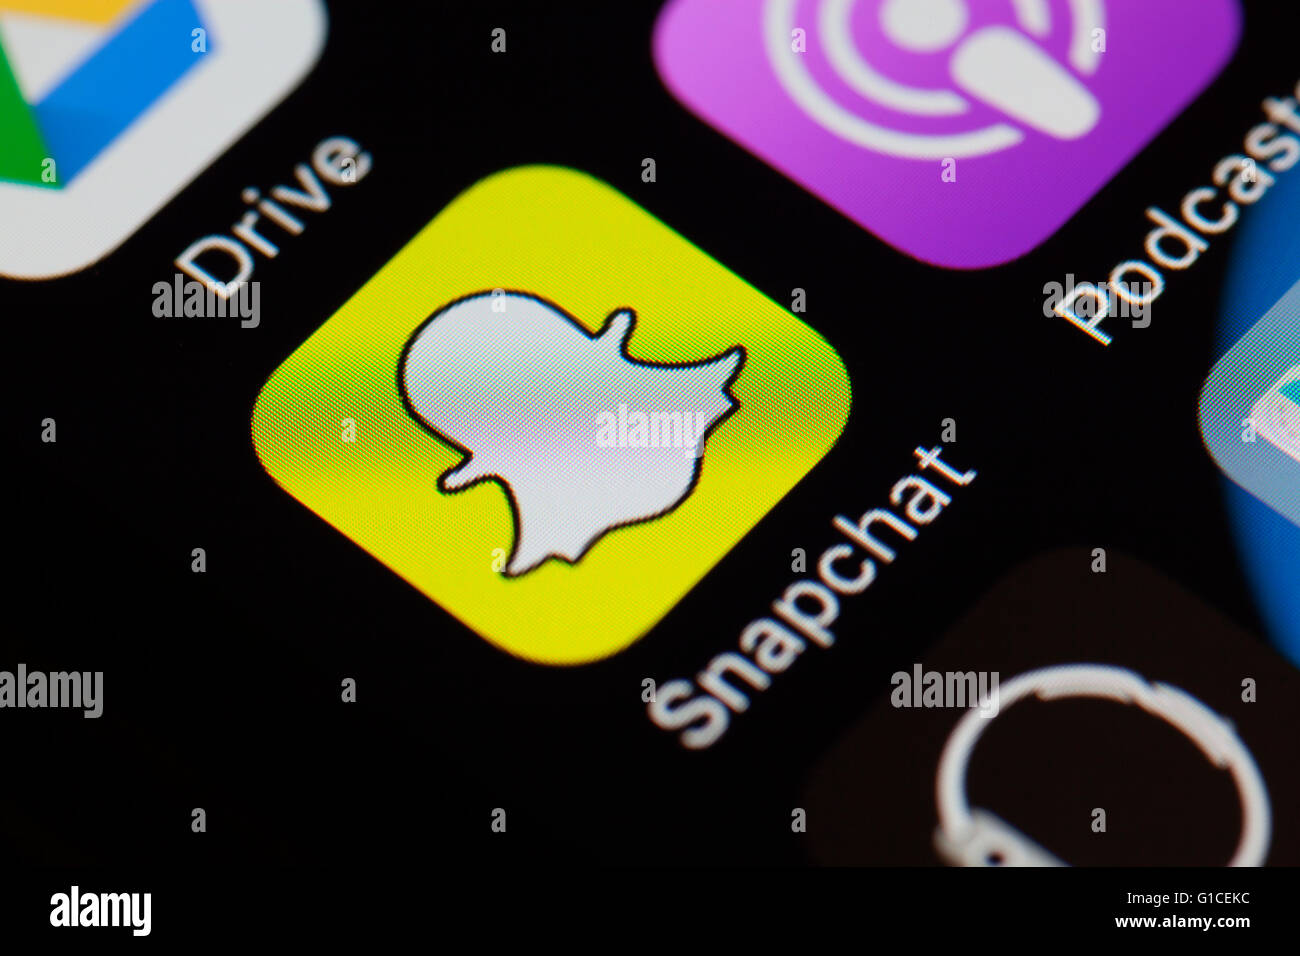 Snapchat app icon on mobile phone. Stock Photo